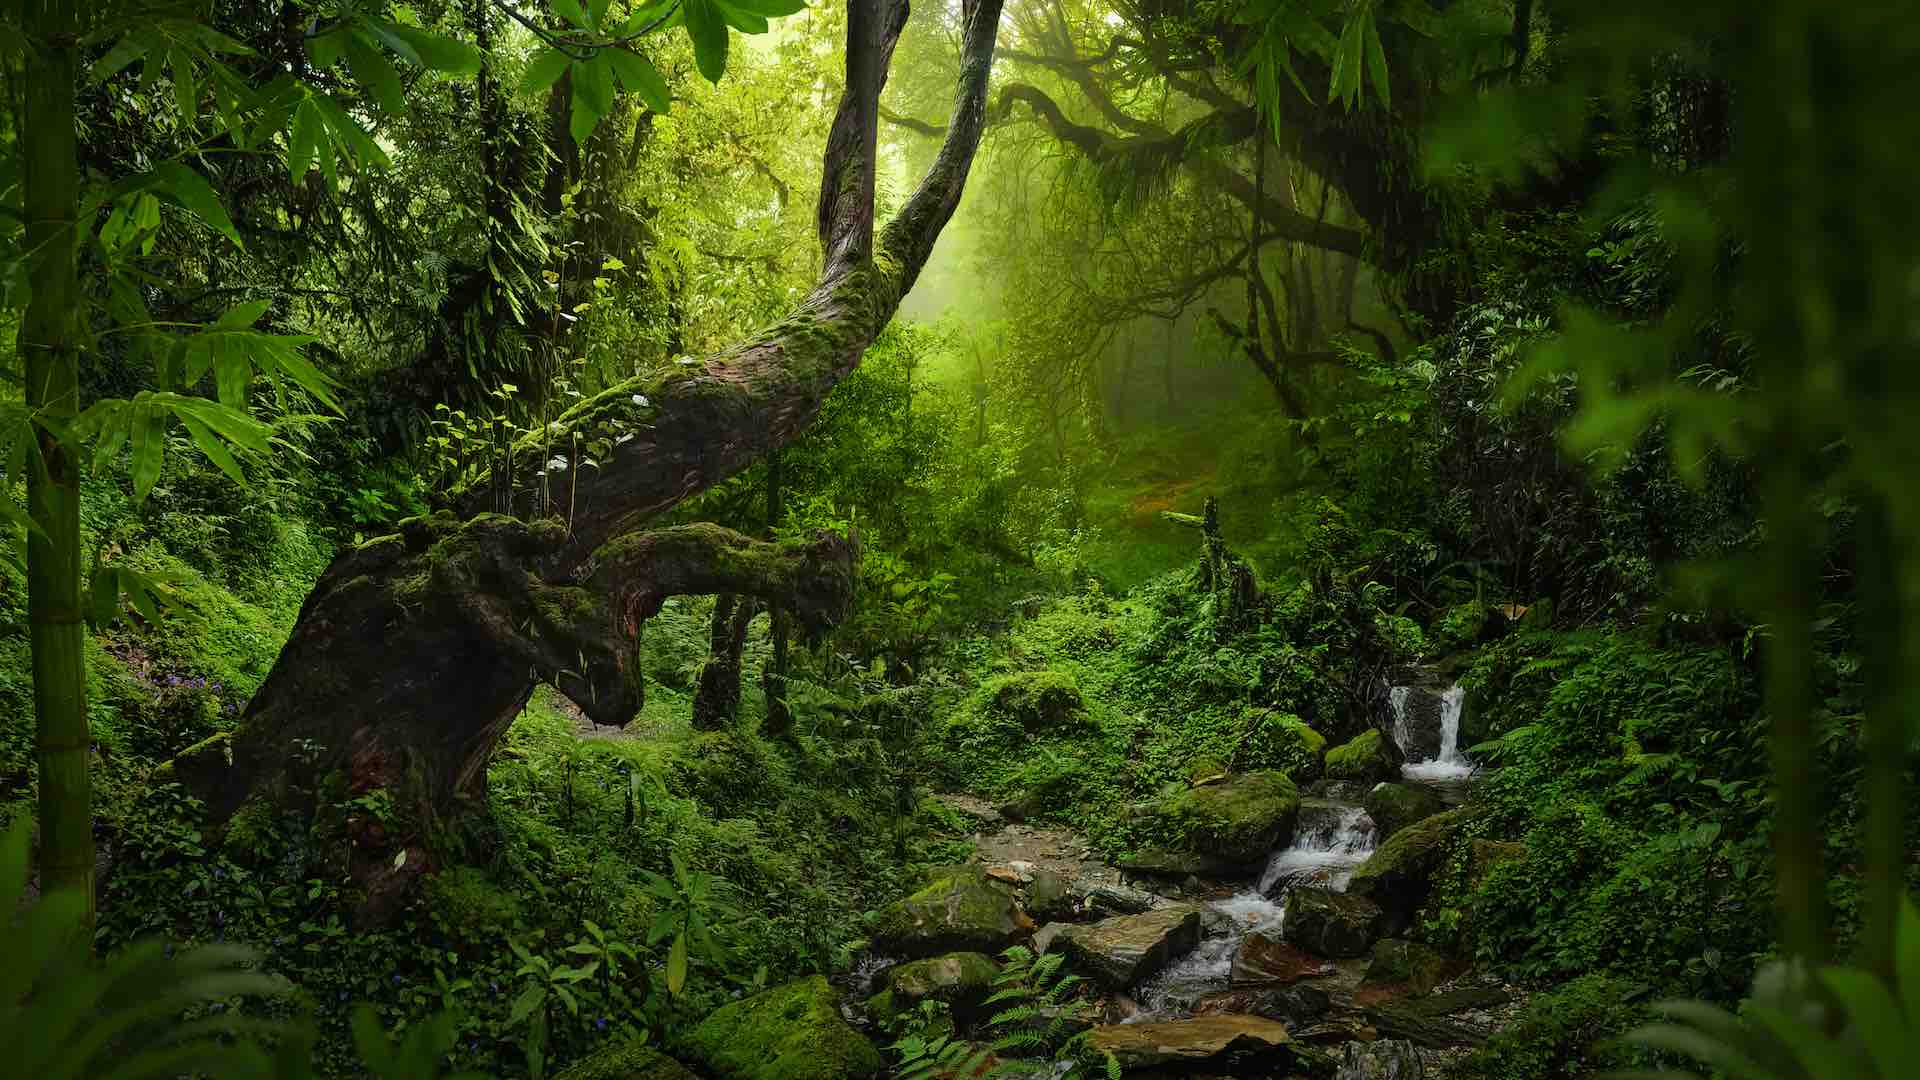 Amazon rainforest guardians recognized by prestigious 'Green Nobel' prize